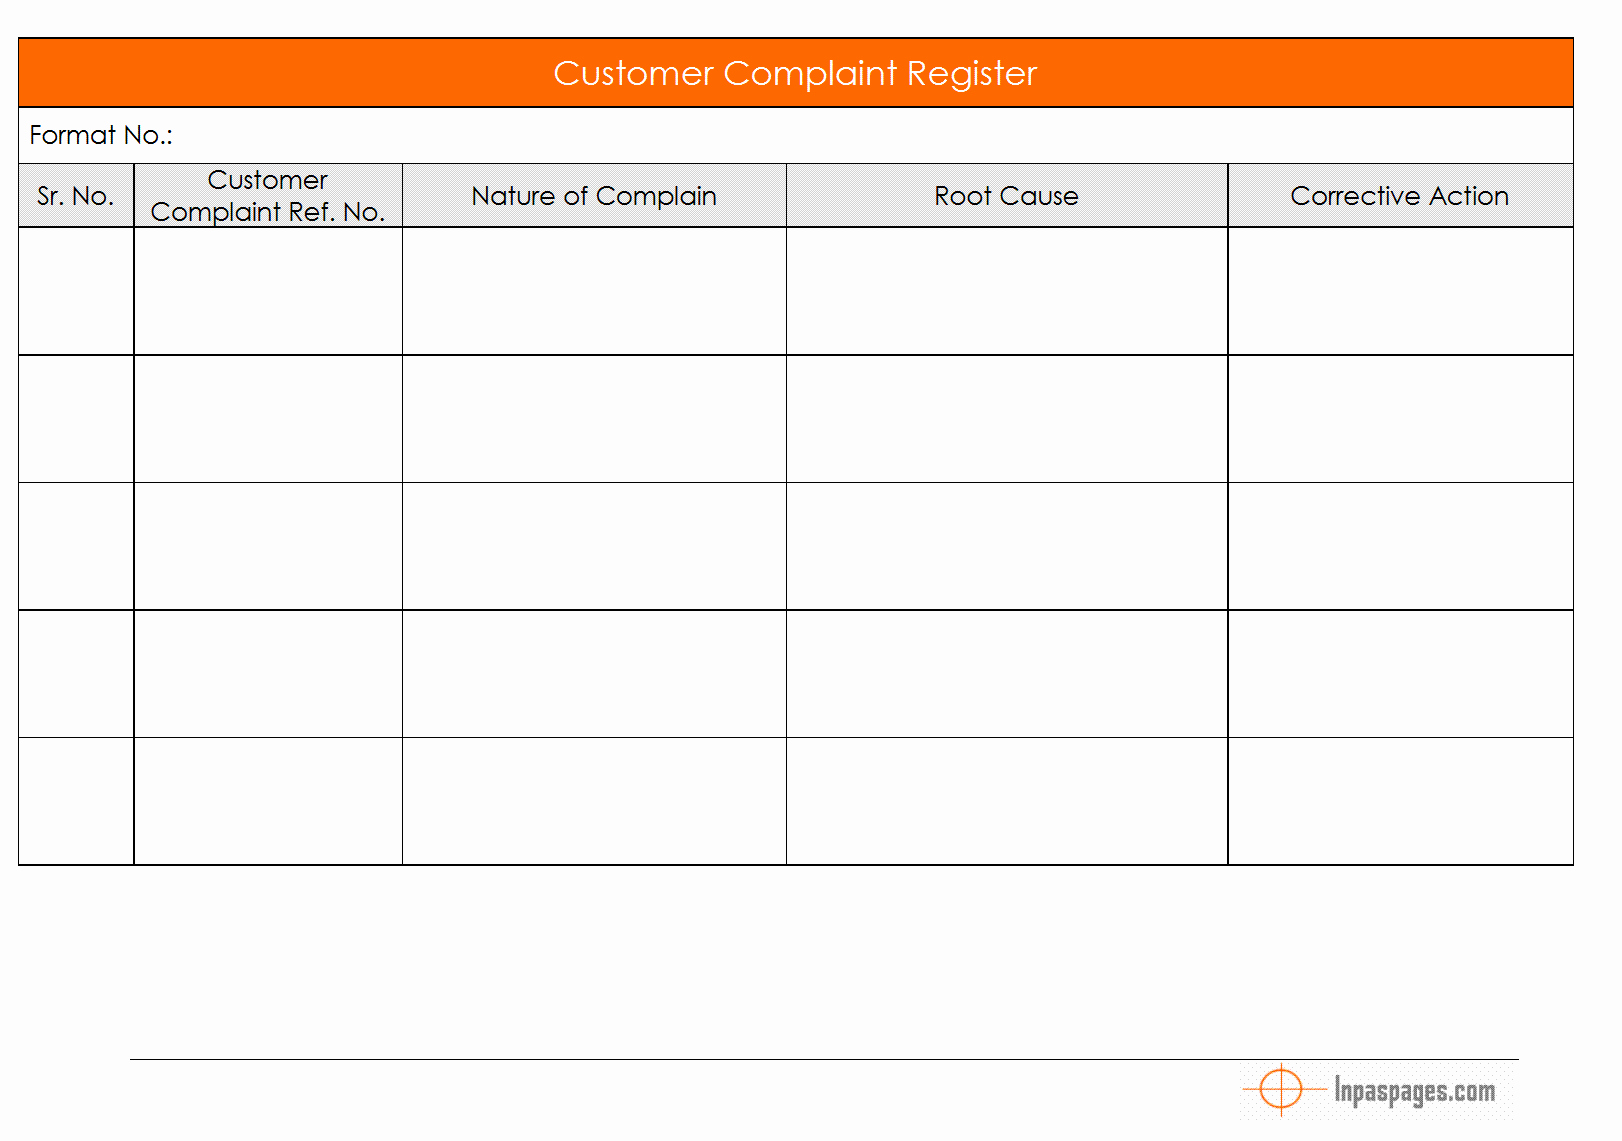 Customer Complaint Template for Excel Luxury Customer Plaint Register